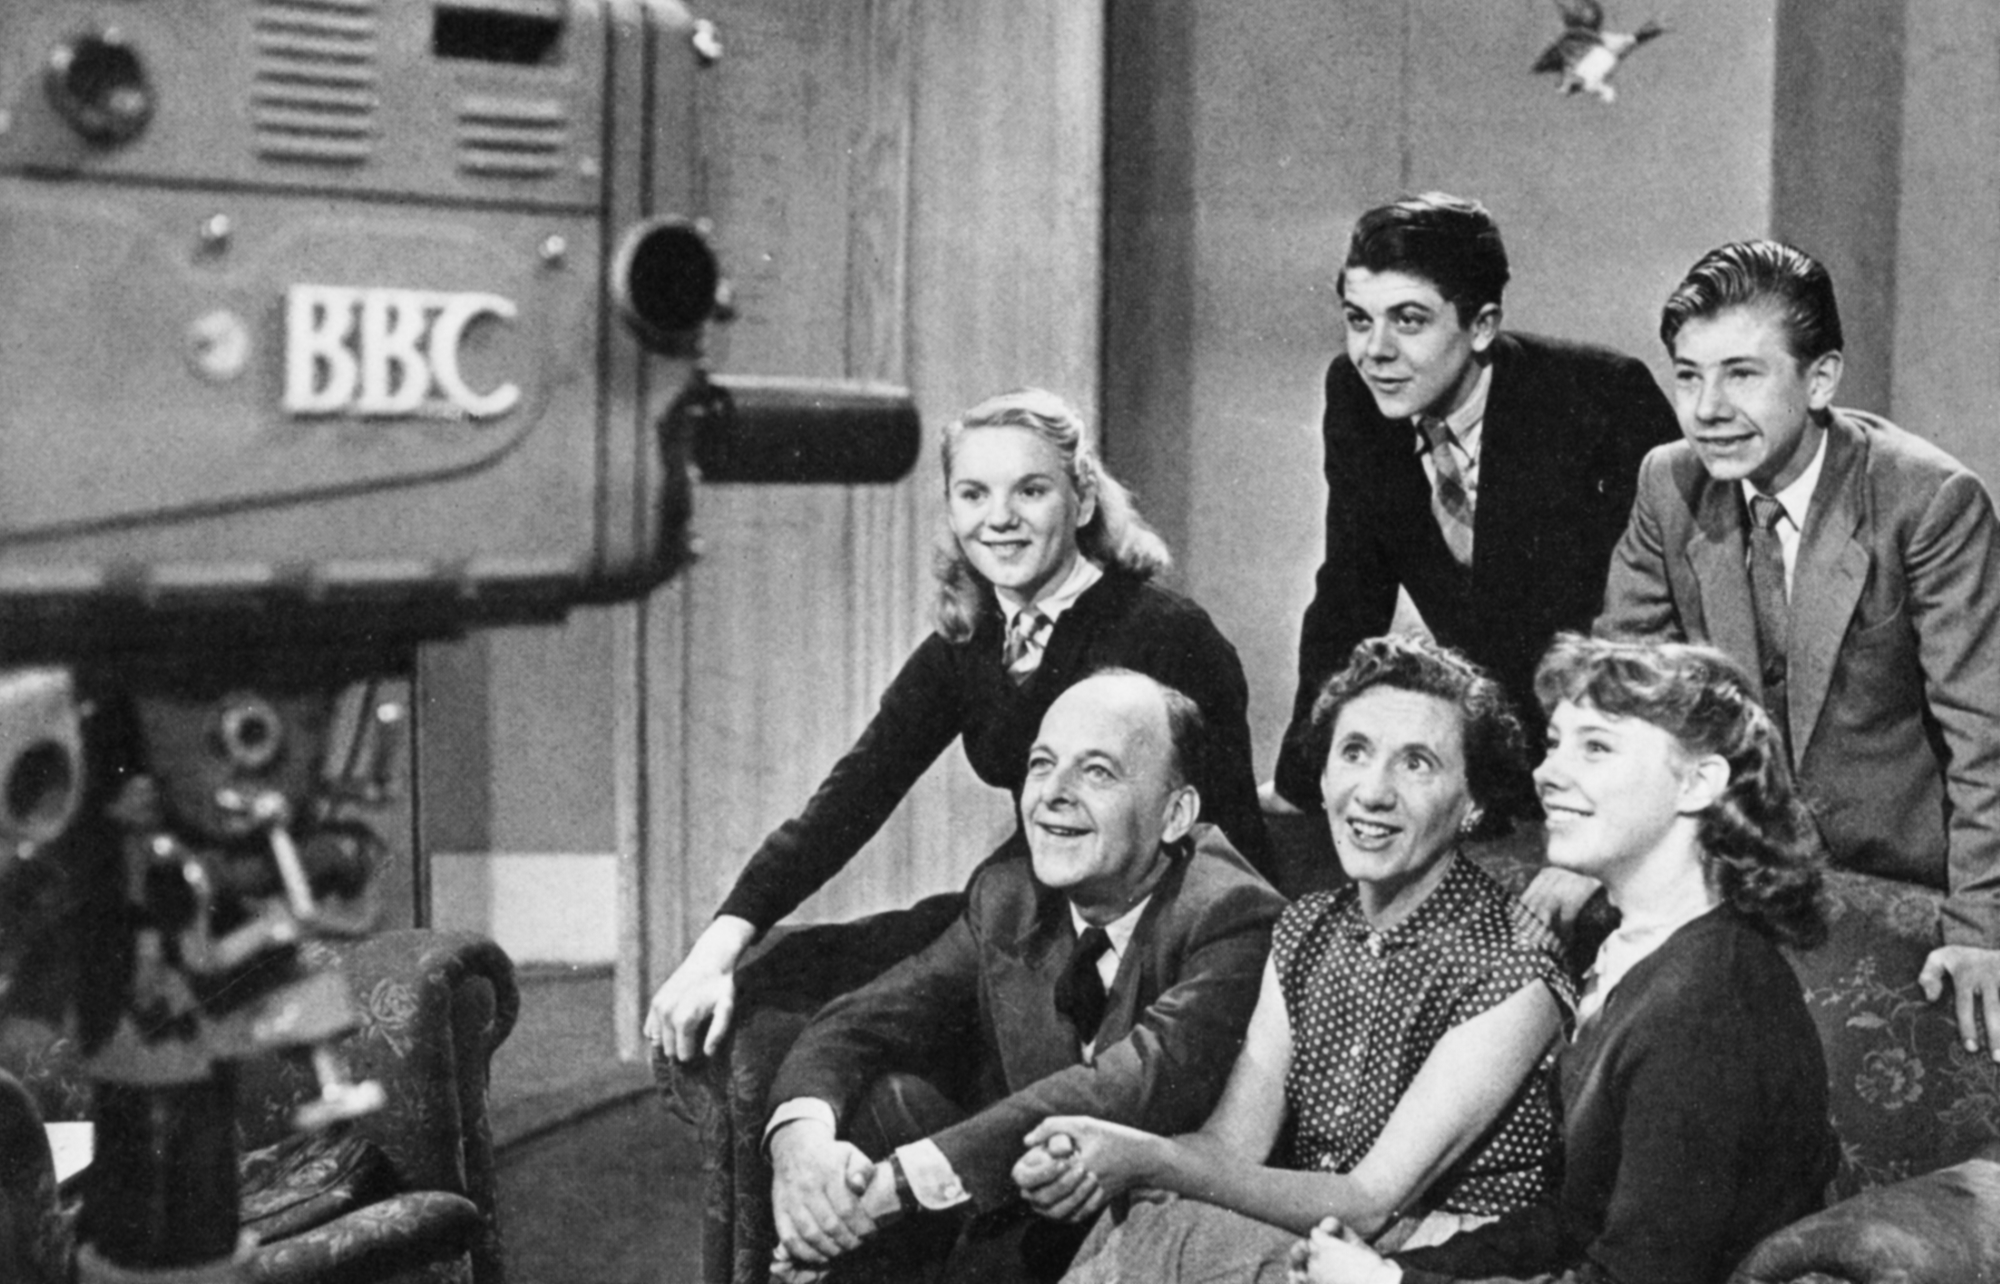 The six Appleyards look towards a BBC camera